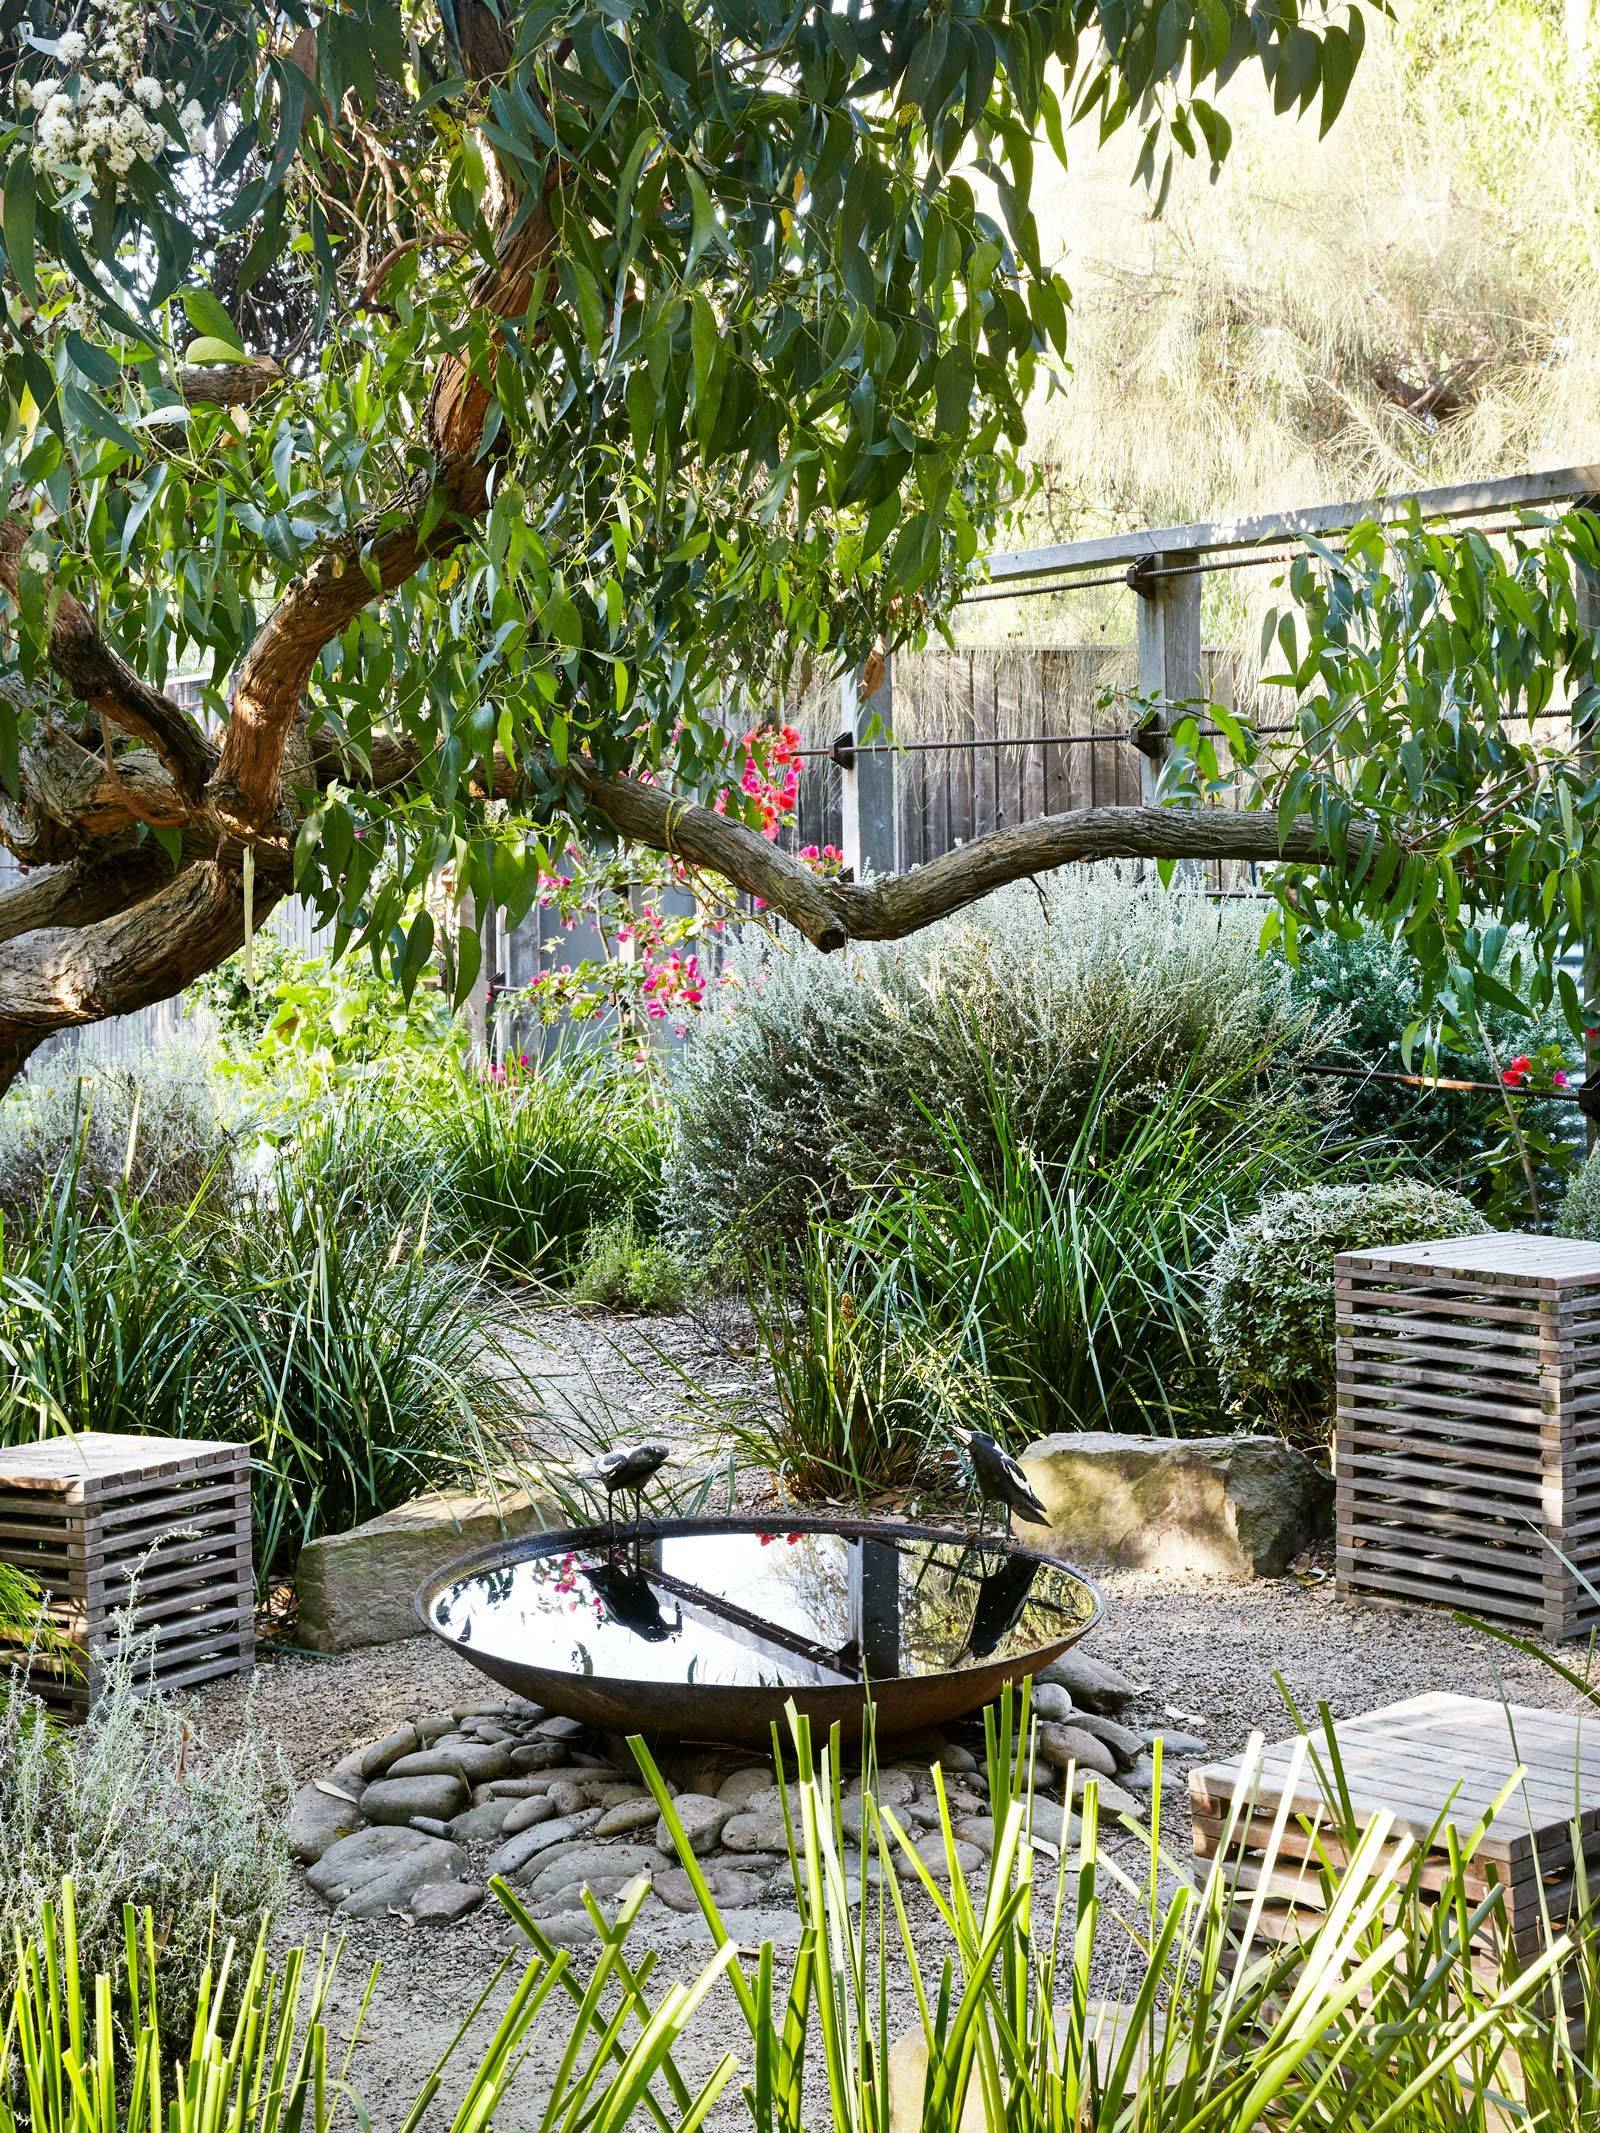 Australian Garden Show Sydney